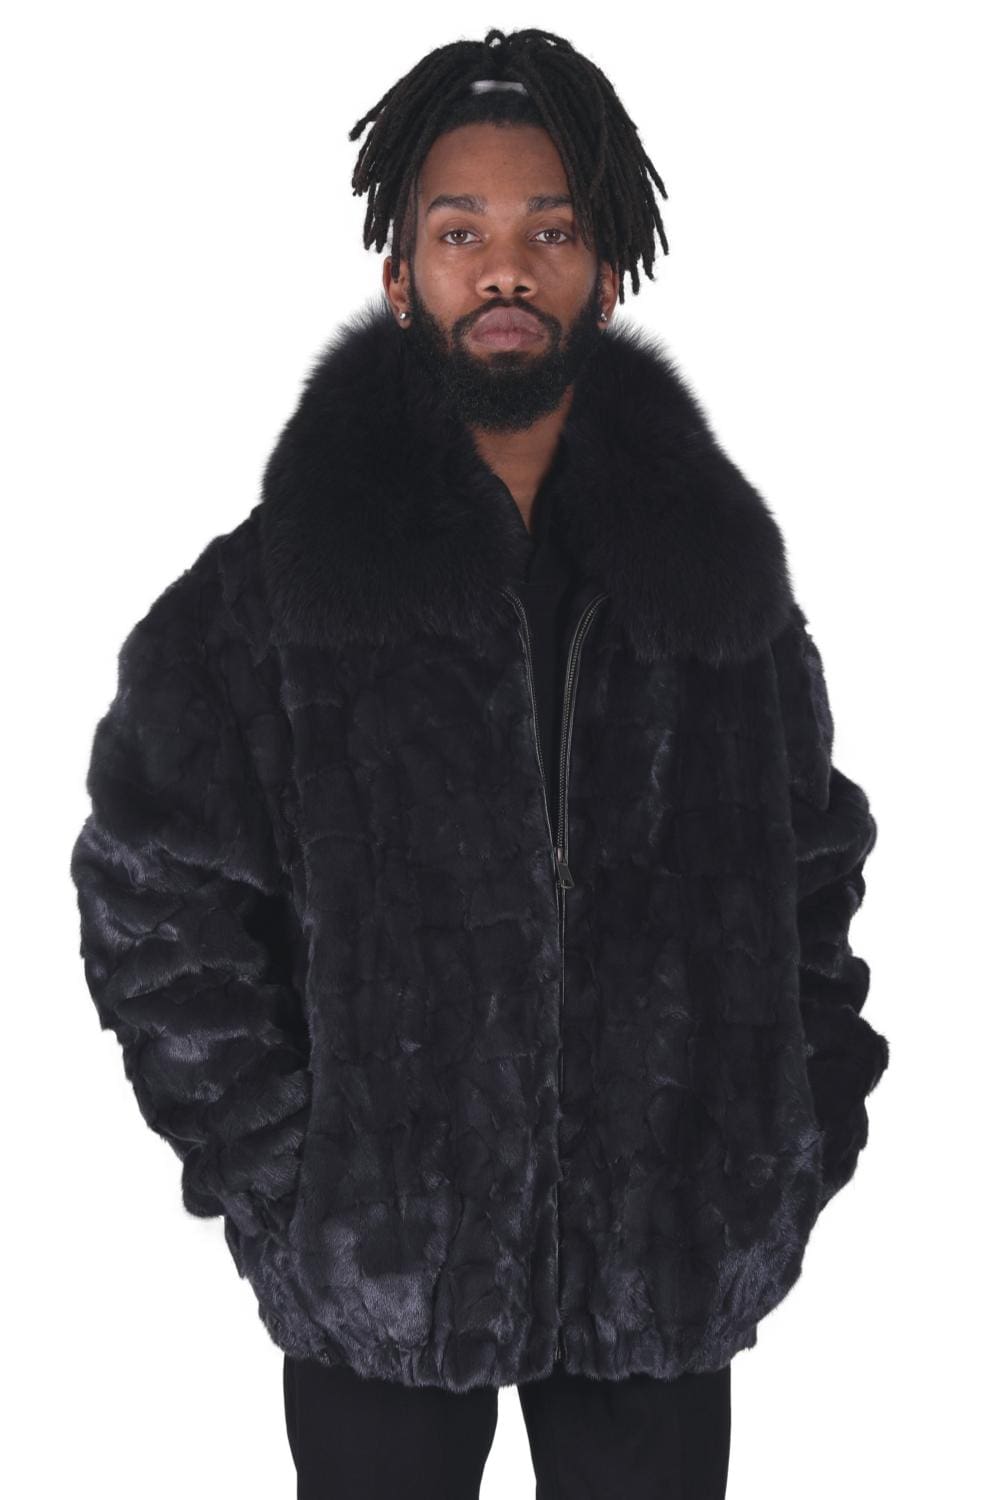 M7 2 man's mink fur jacket